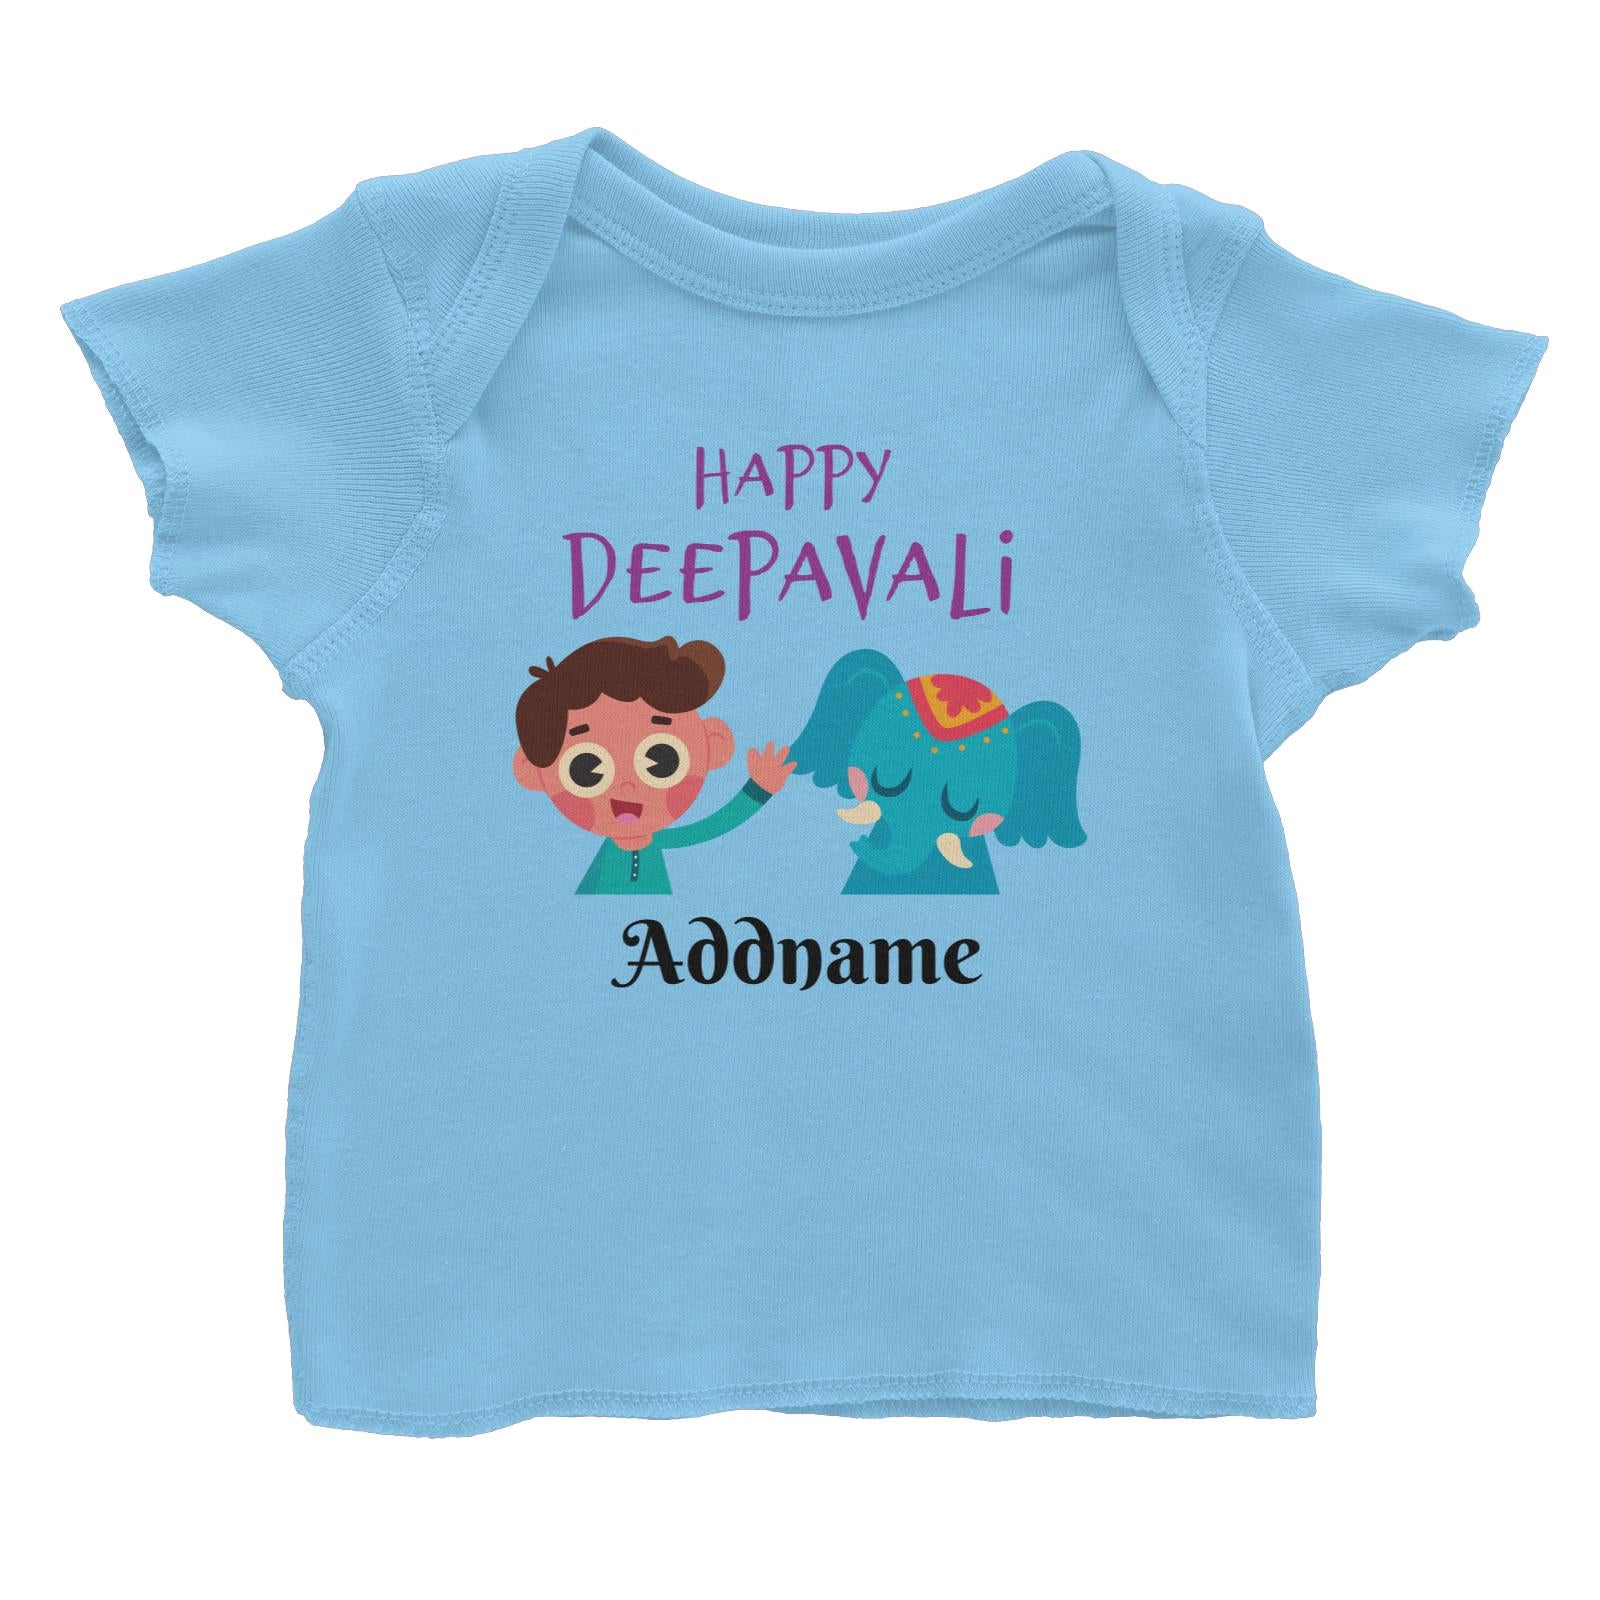 Deepavali Series Little Boy Wishes You Happy Deepavali Baby T-Shirt